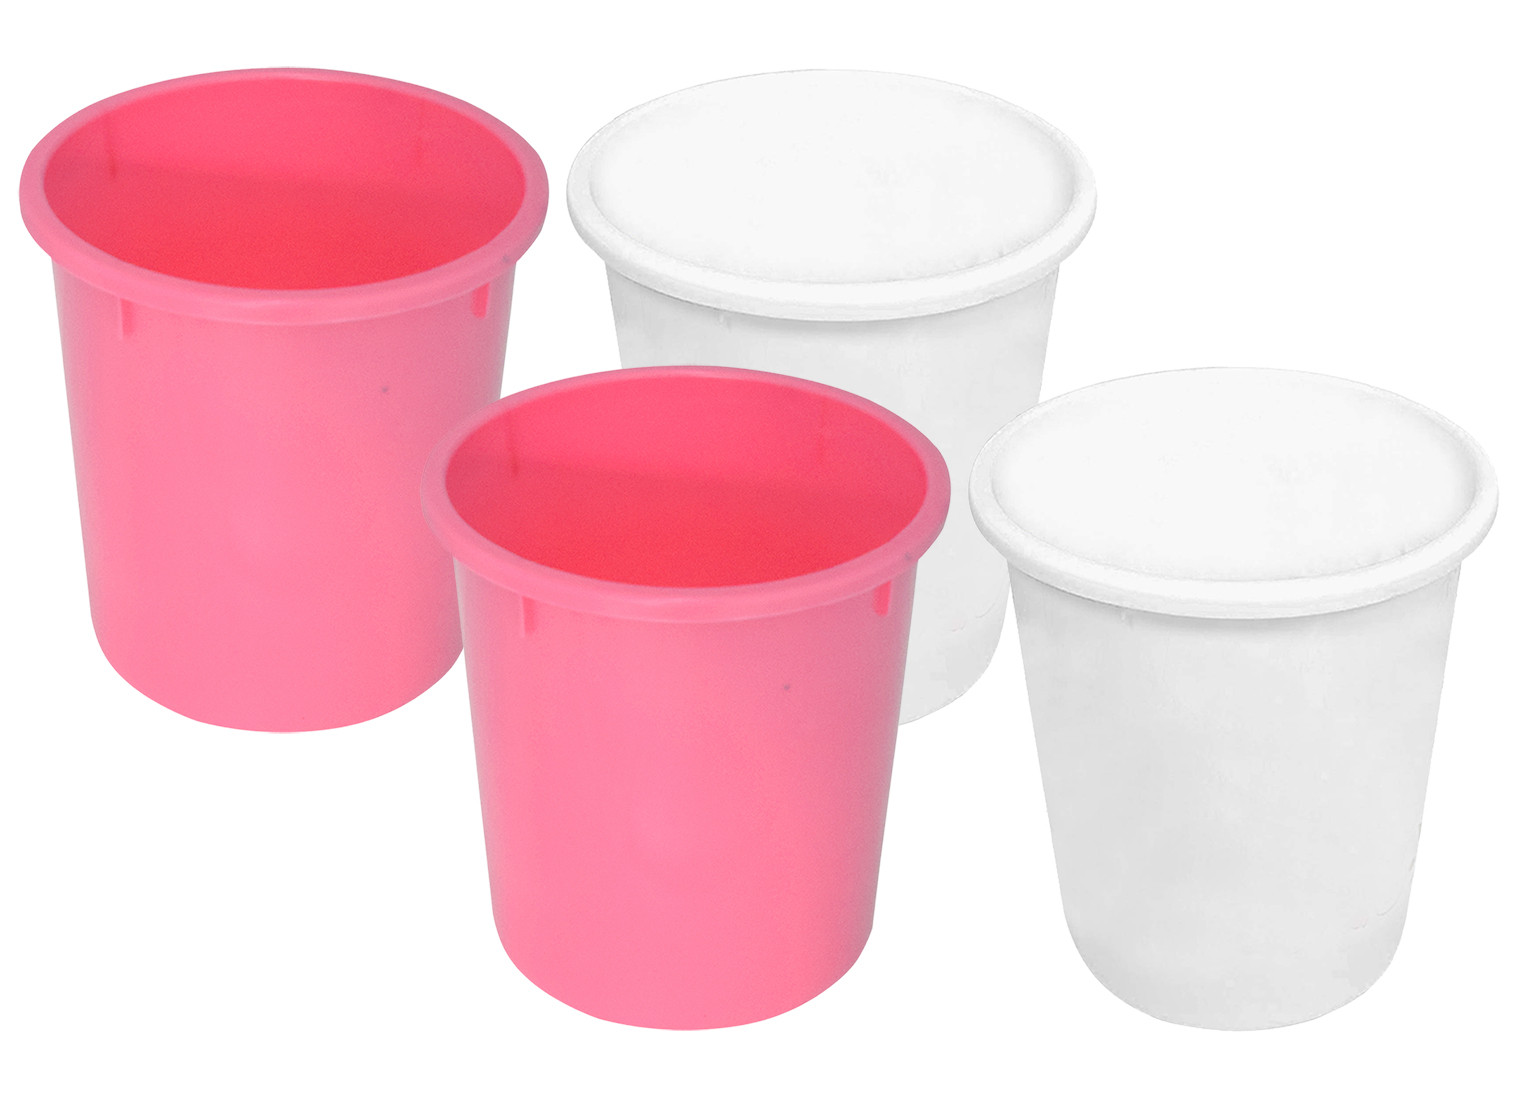 Kuber Industries Plastic Open Dustbin, Garbage Bin For Home, Kitchen, Office, 5Ltr.- (Pink & White)-47KM01073